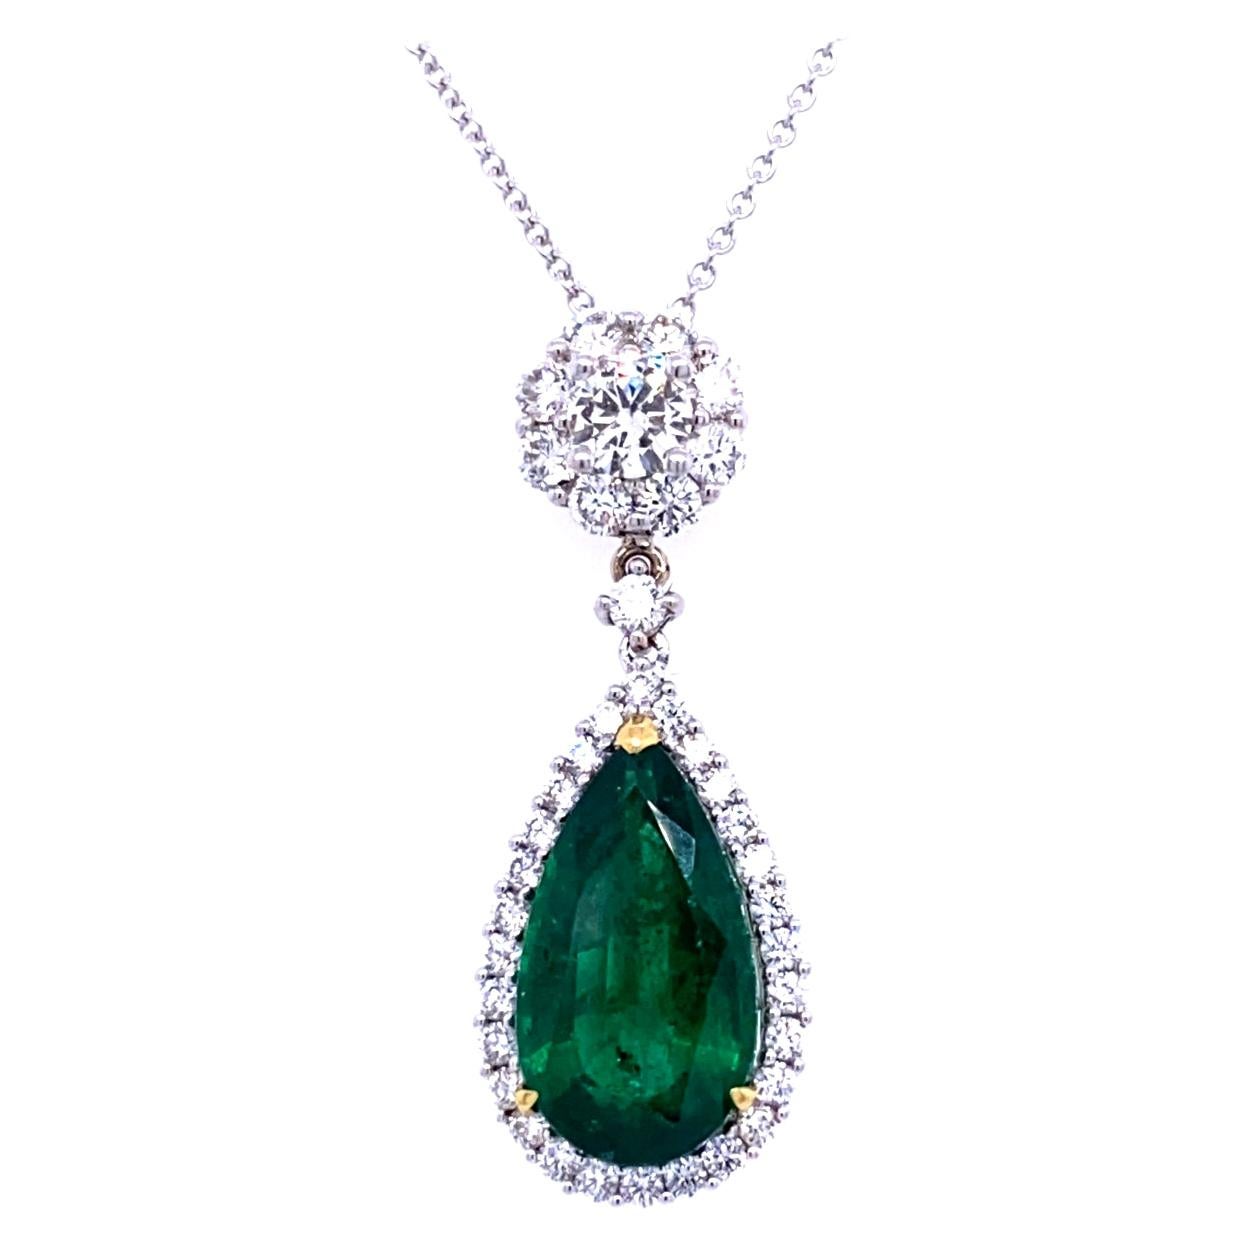 7.00 Carat Pear Shape Emerald Pendant in 18K Gold with 1.85 Carat Diamonds Halo For Sale